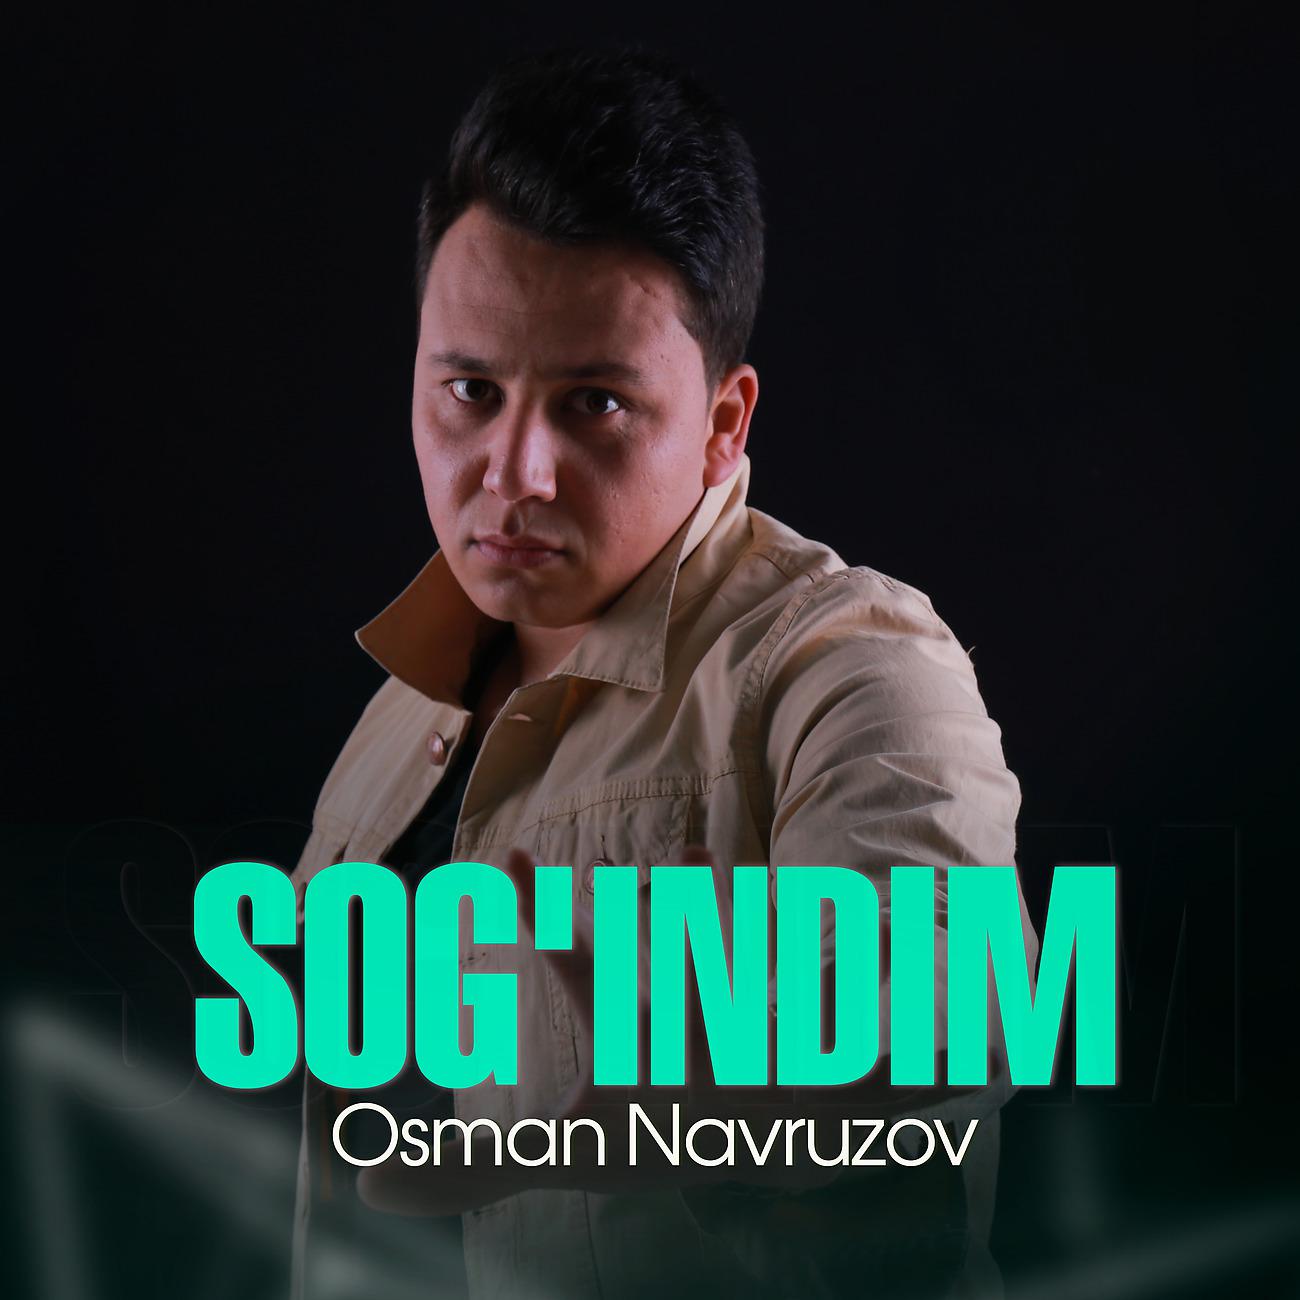 Постер альбома Sog'indim